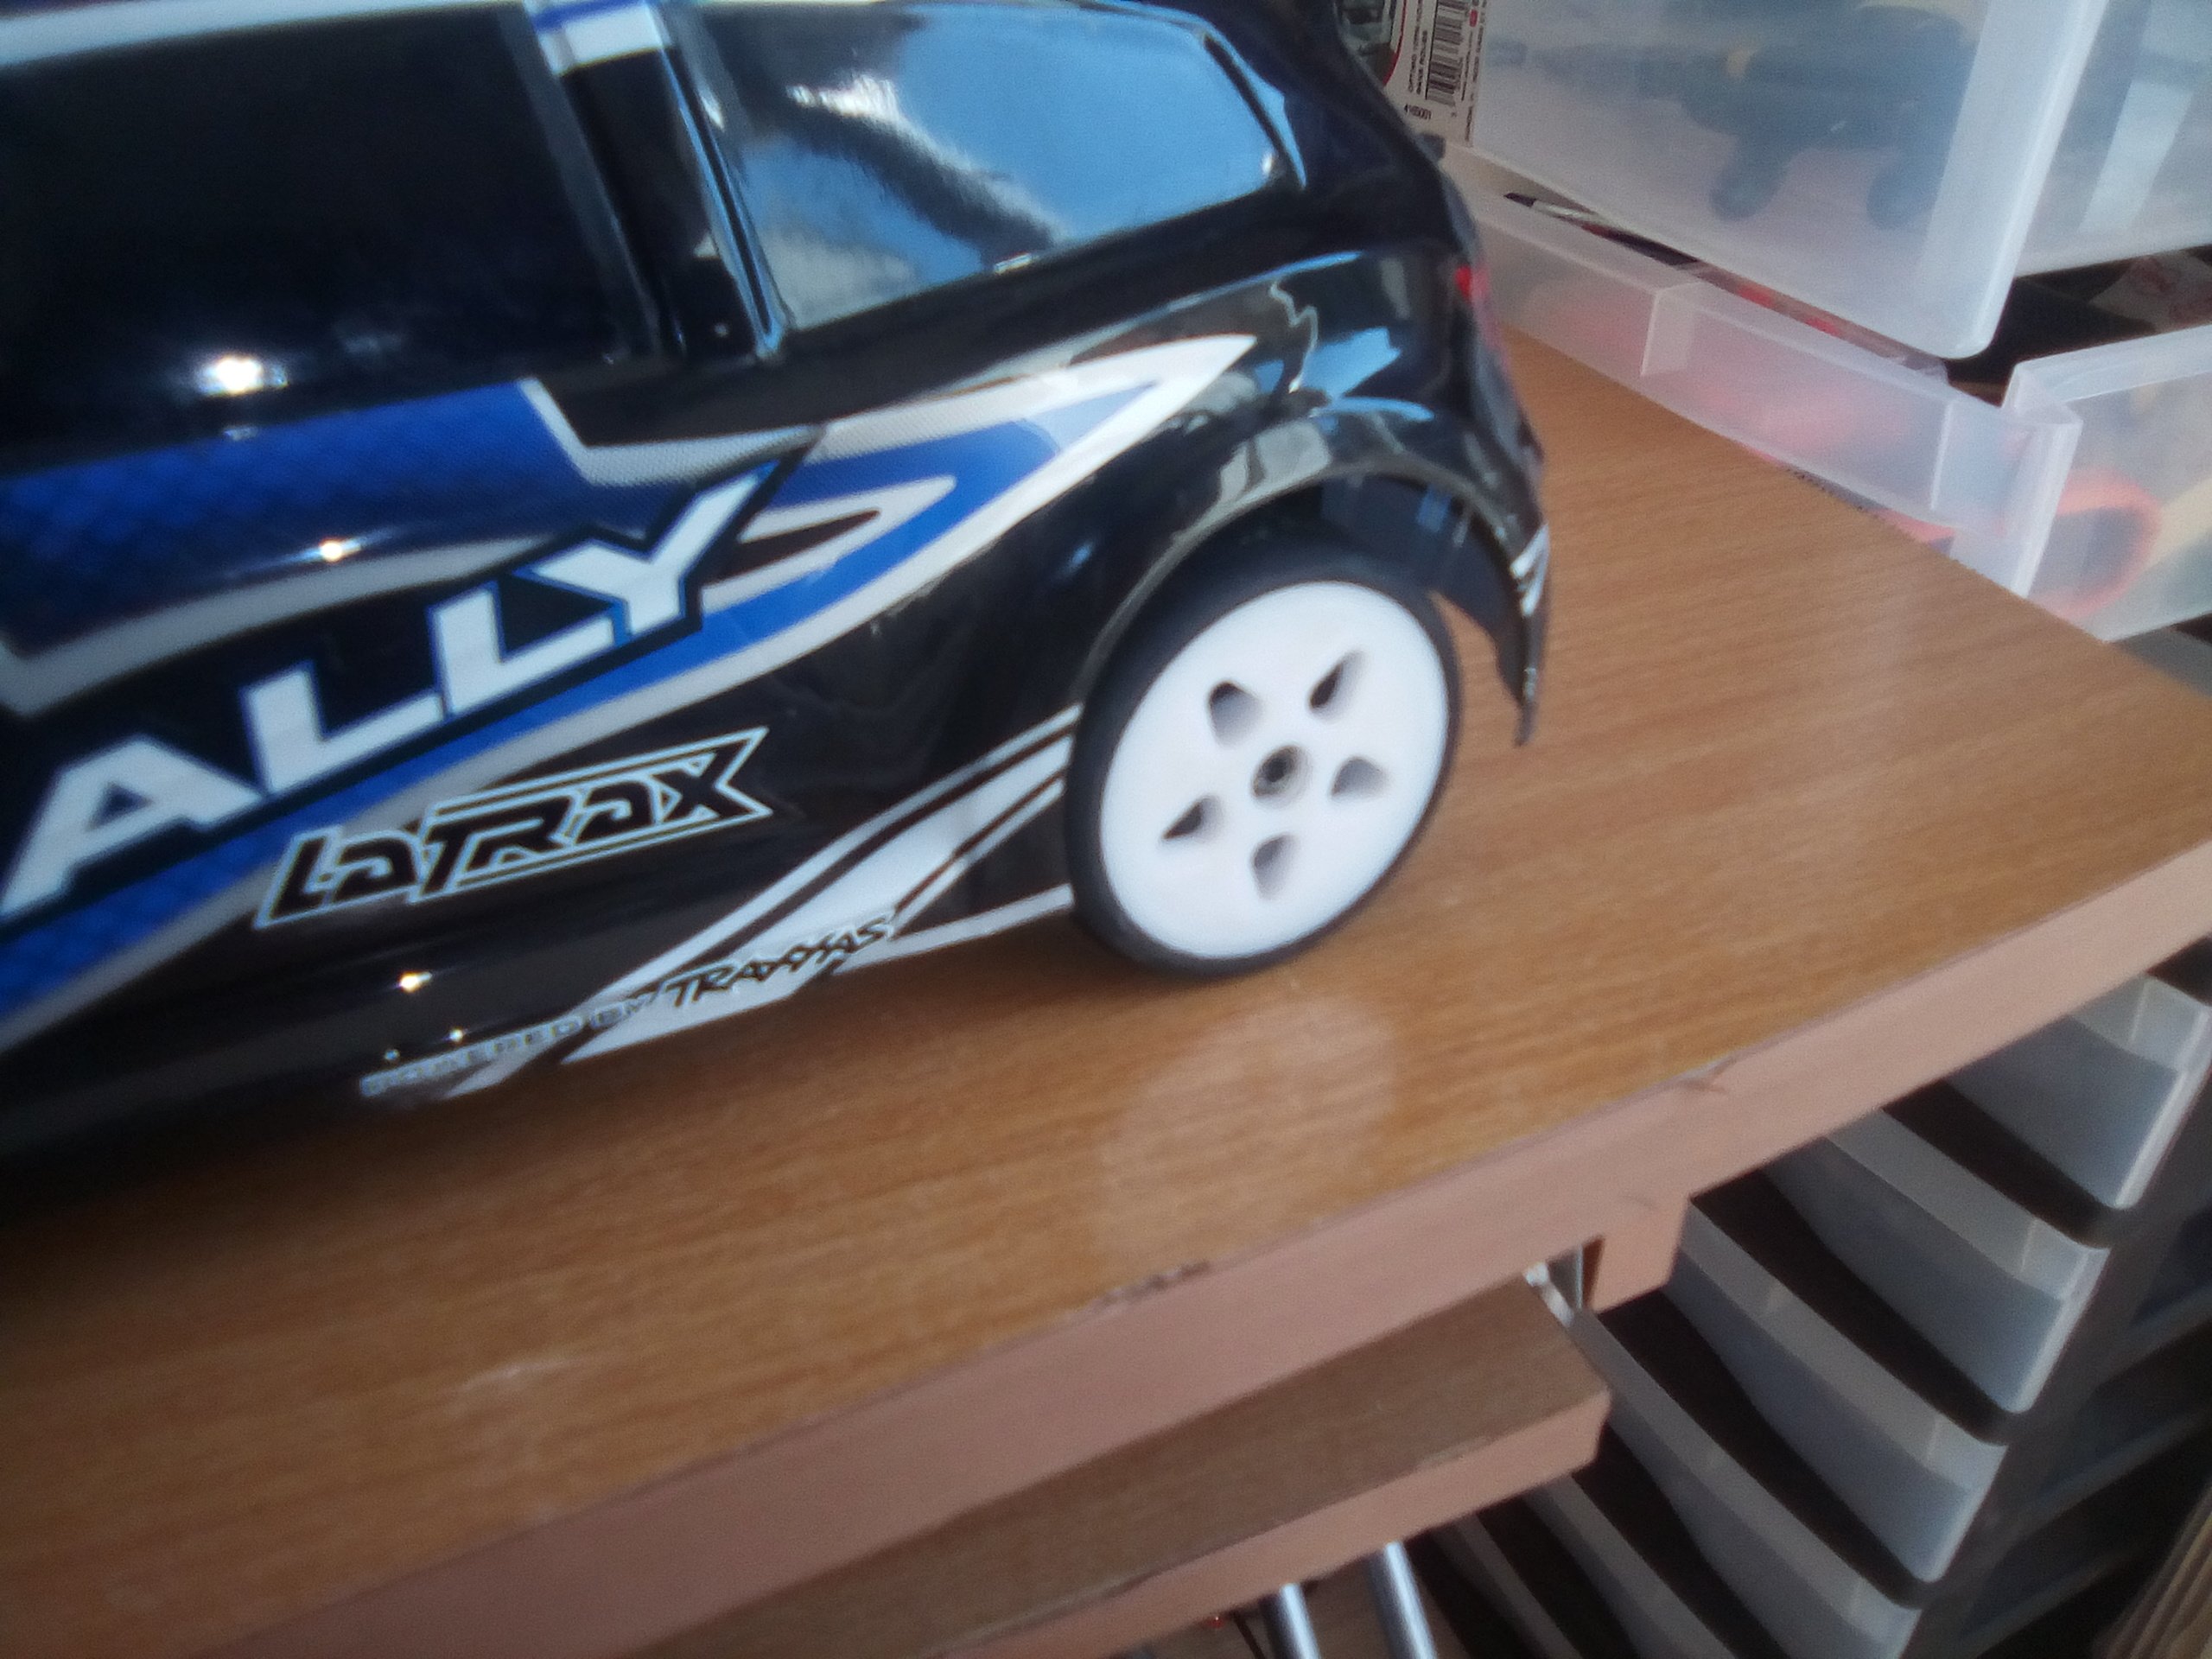 Latrax Rally - Gluless rims (easy print)